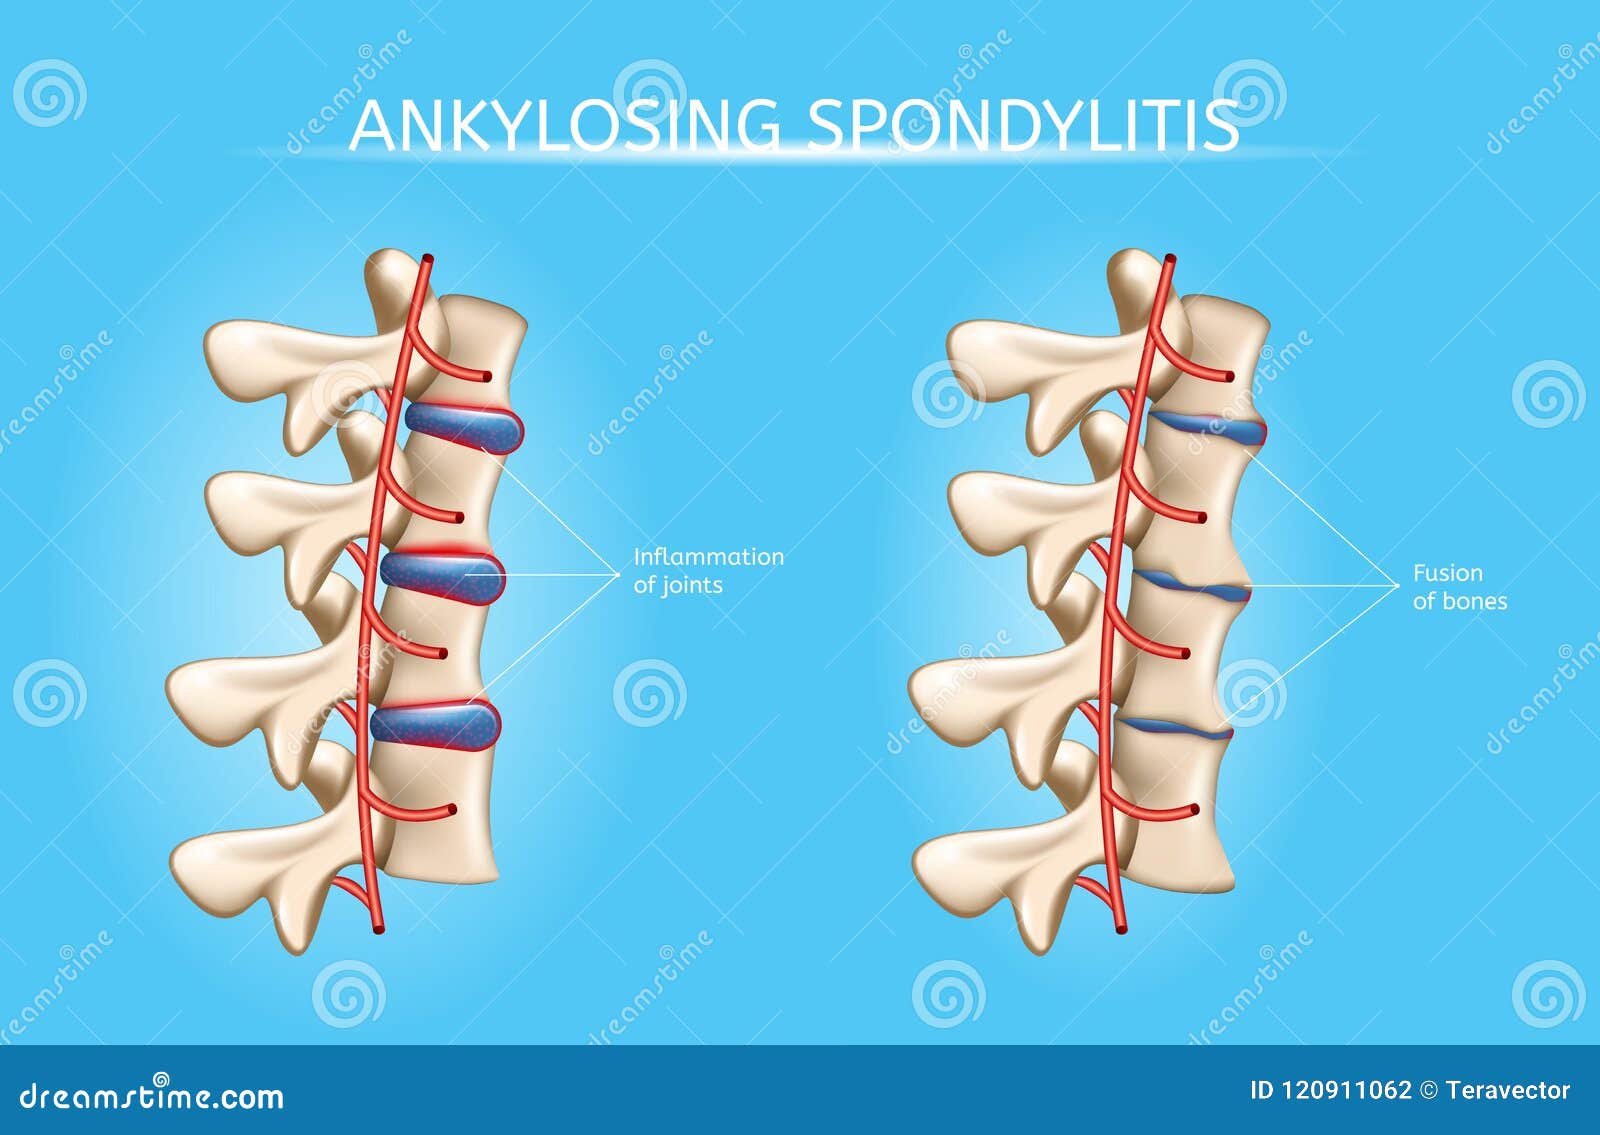 Spine Symptoms Chart